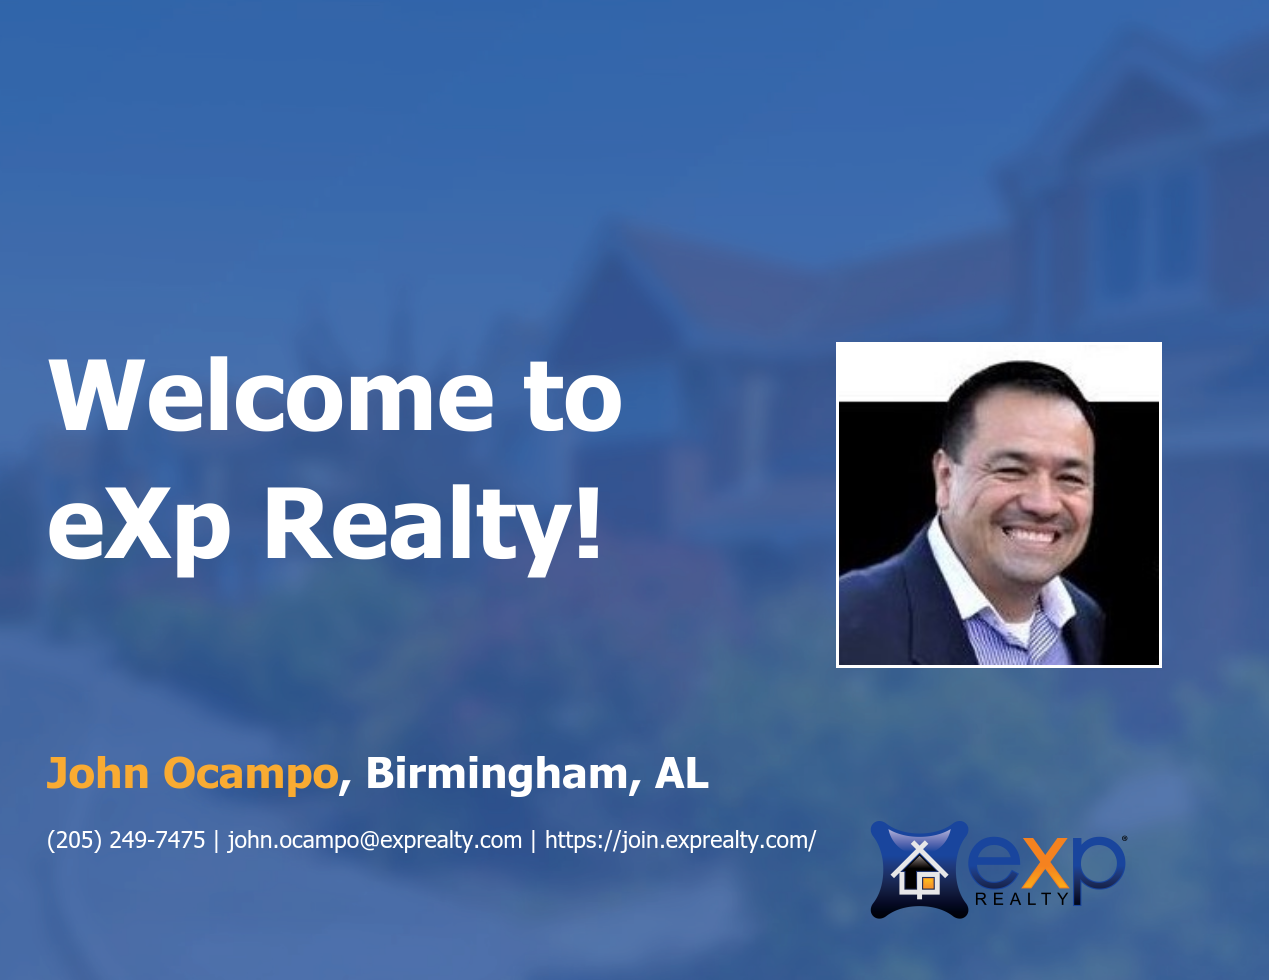 eXp Realty Welcomes John Ocampo!